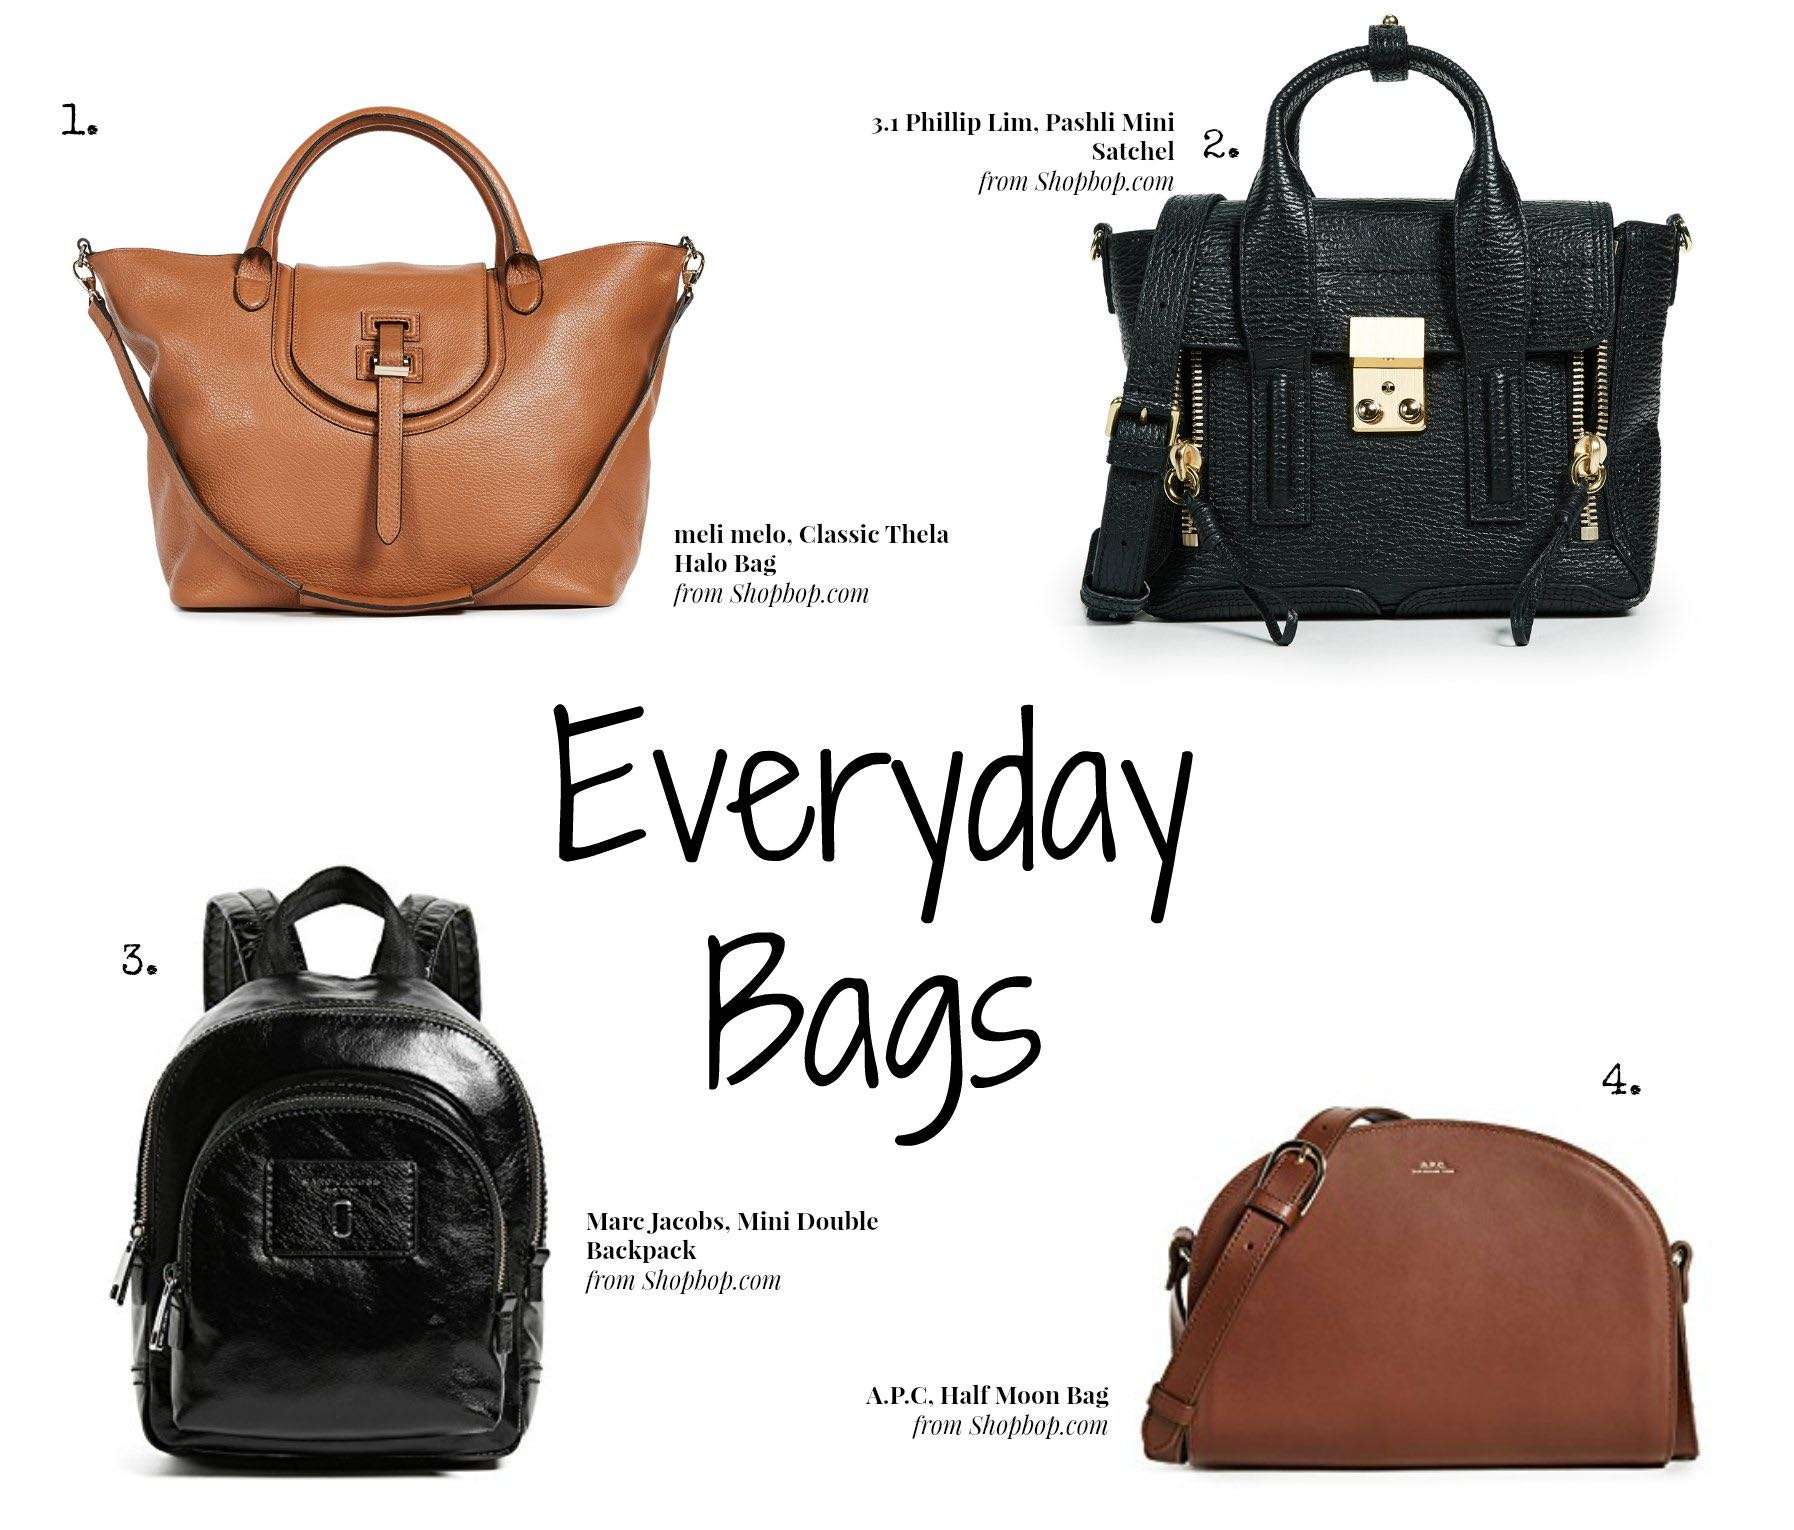 Shopbop Sale - Everyday Bags